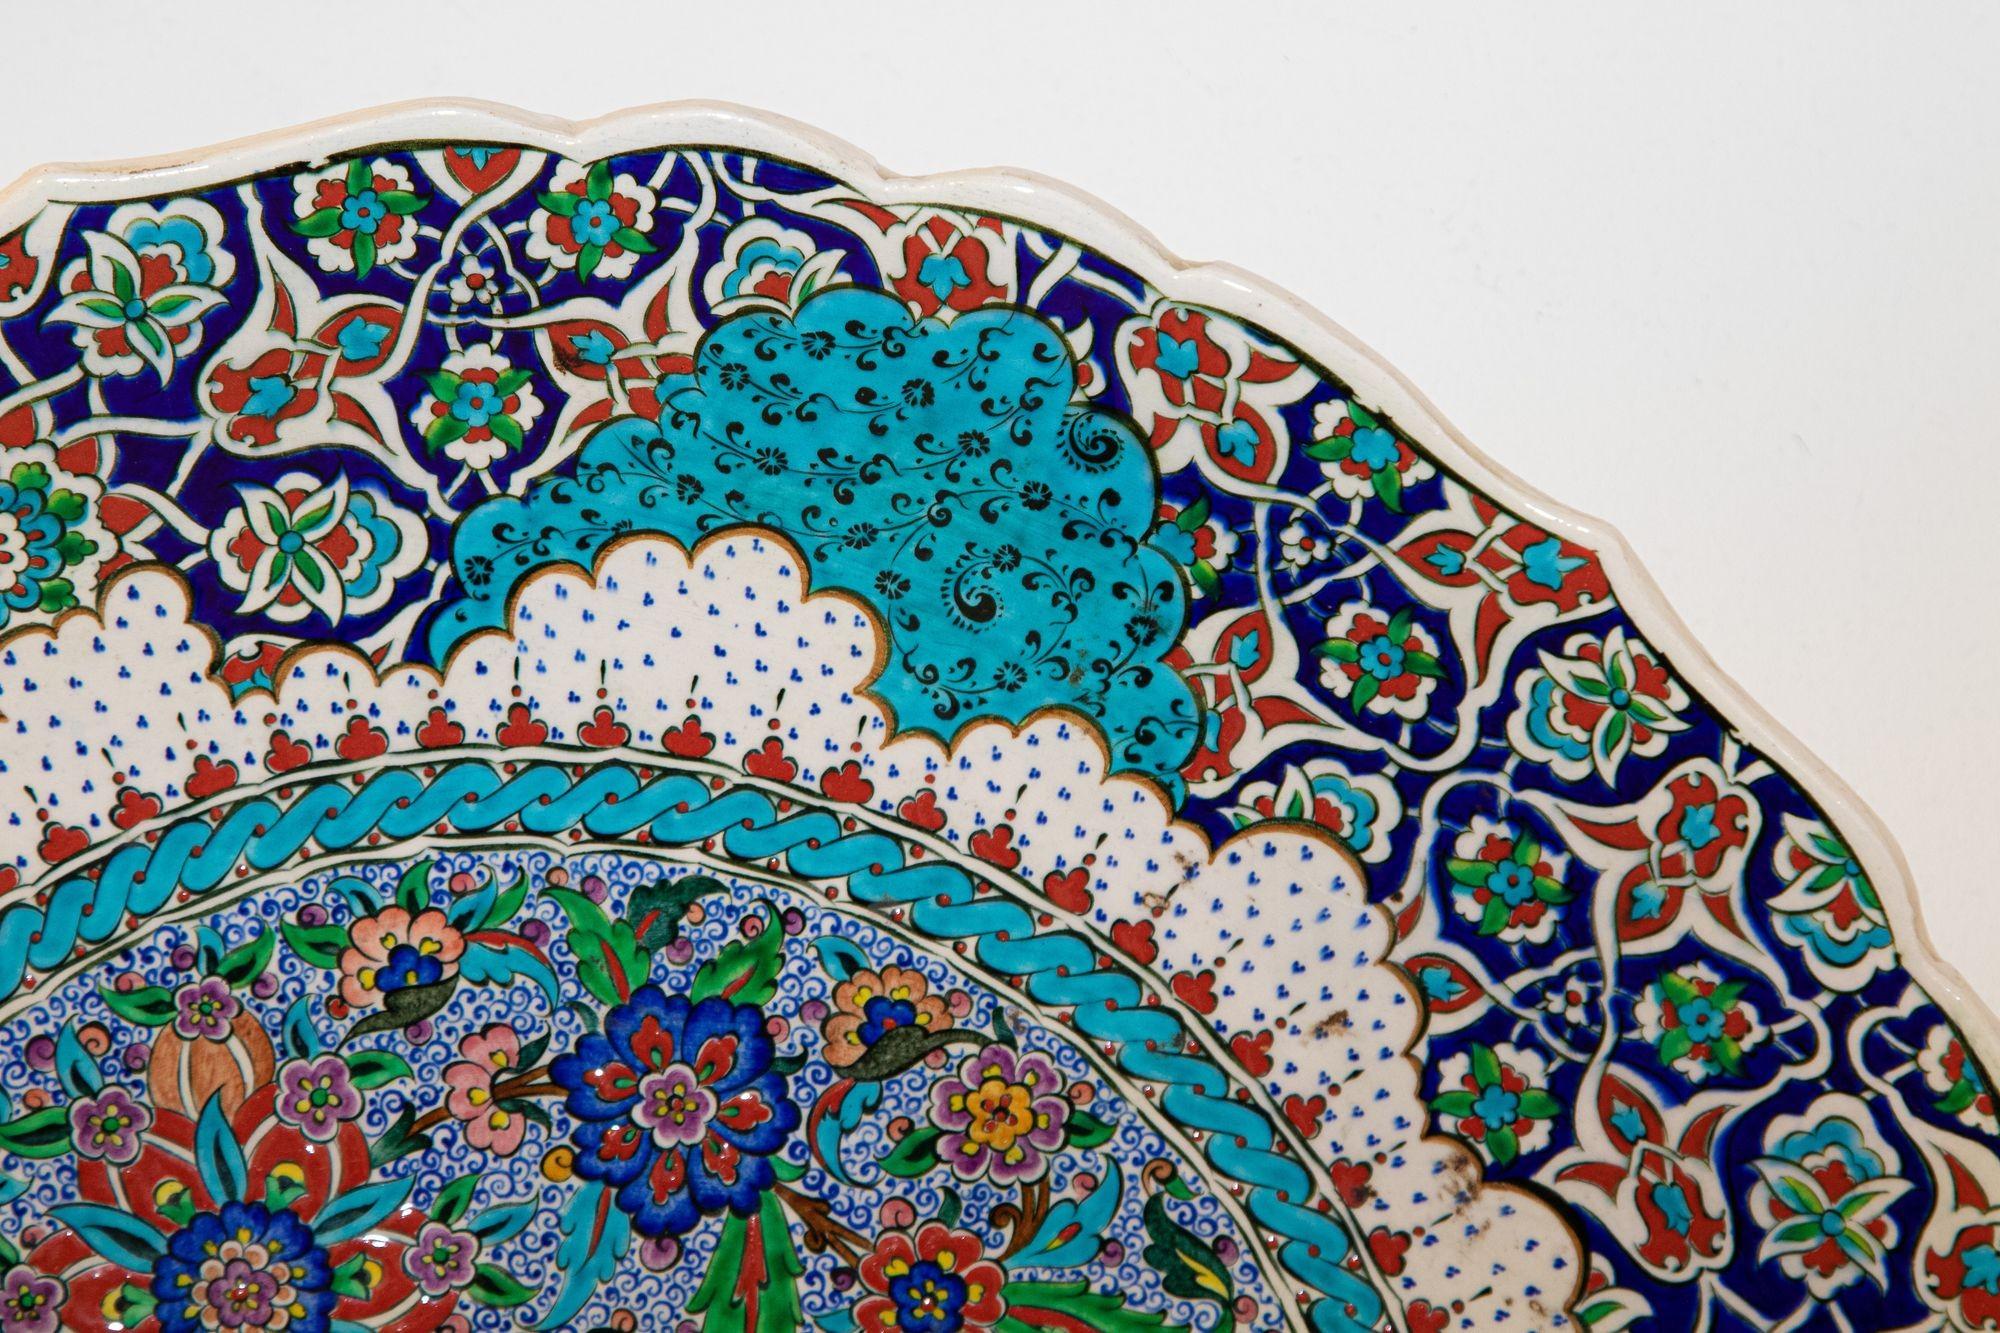 Hand Painted Decorative Plate After an Original Iznik 16th C. Ottoman Design 4